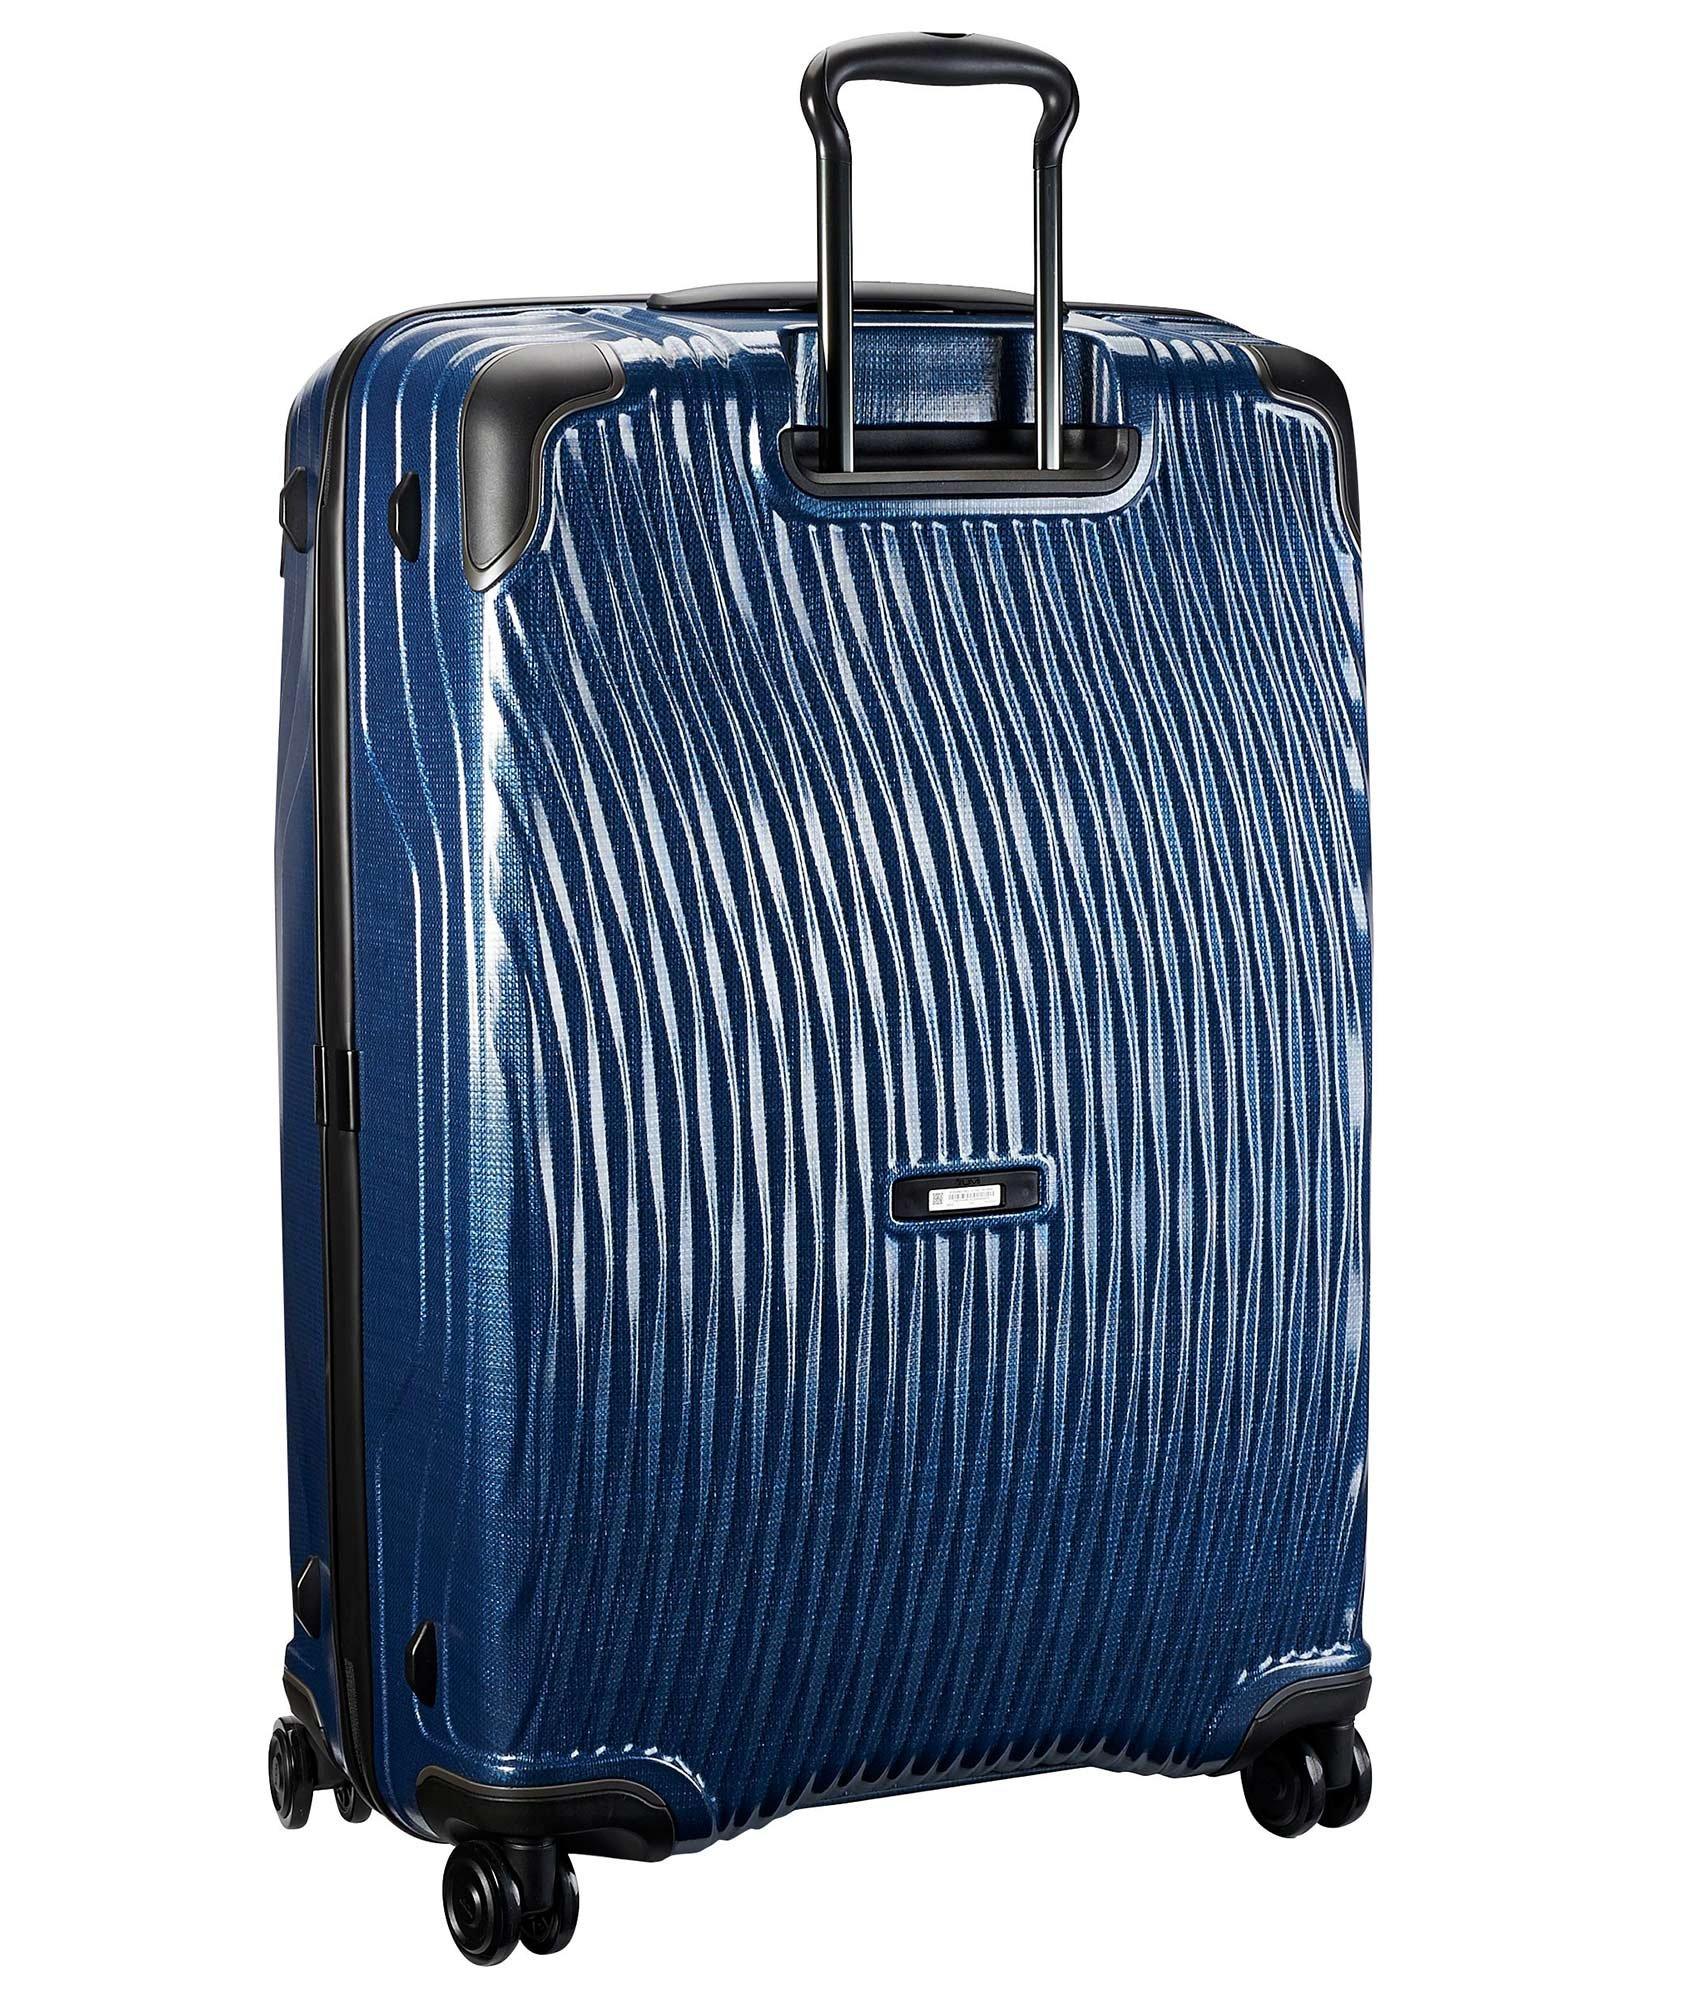 Worldwide Trip Suitcase image 1